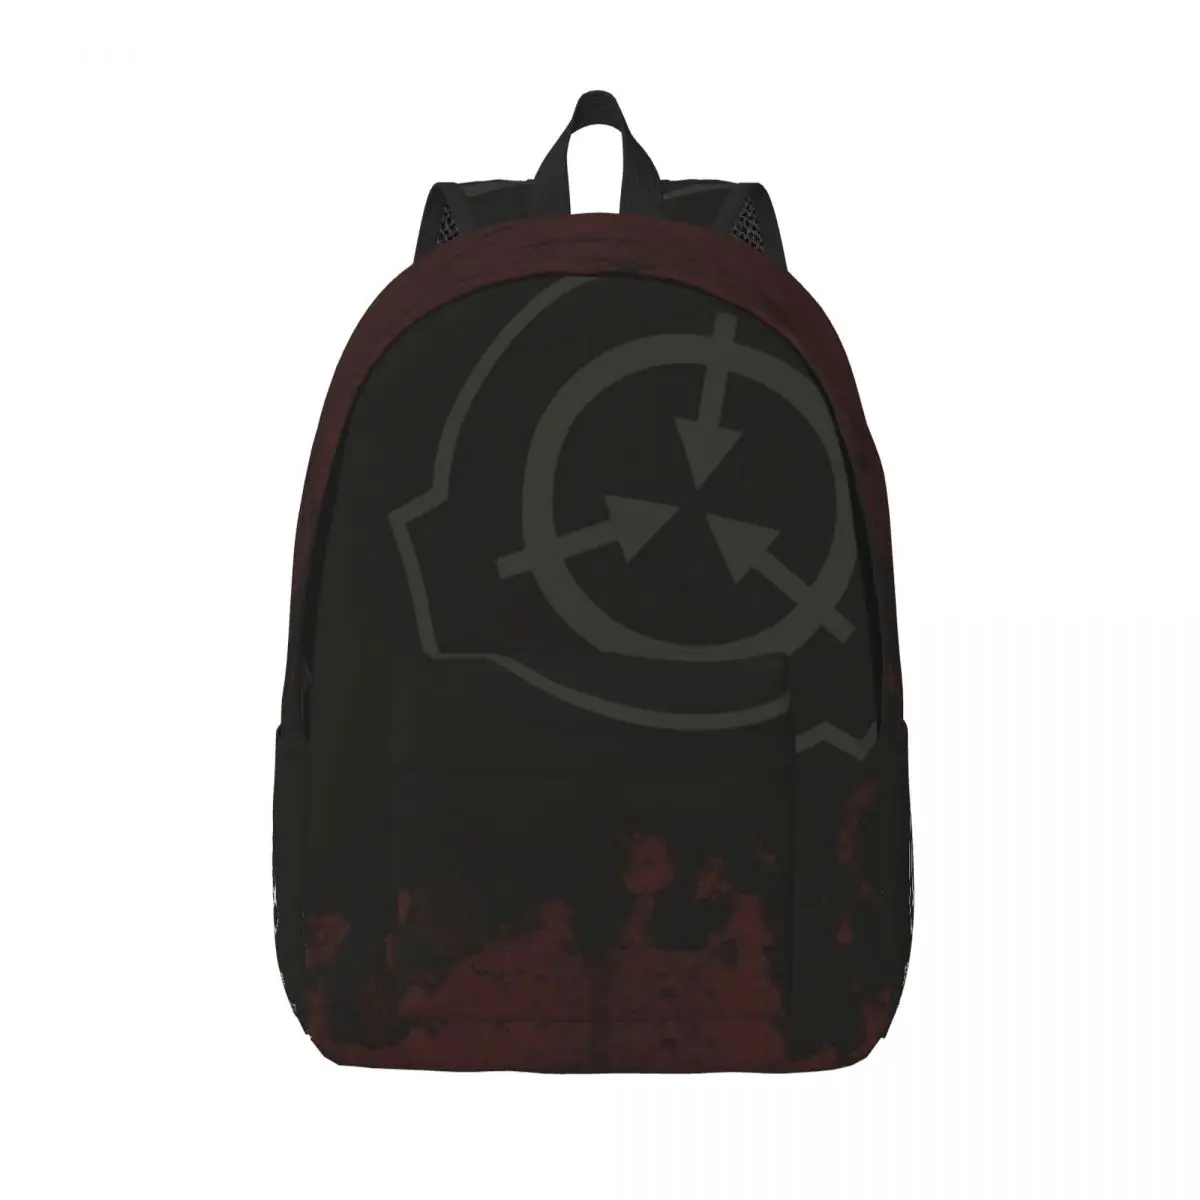 

Secure Contain Protect SCP Foundation Emblem Backpack for Men Women Teenage Student Work Daypack Laptop Shoulder Bag Sports